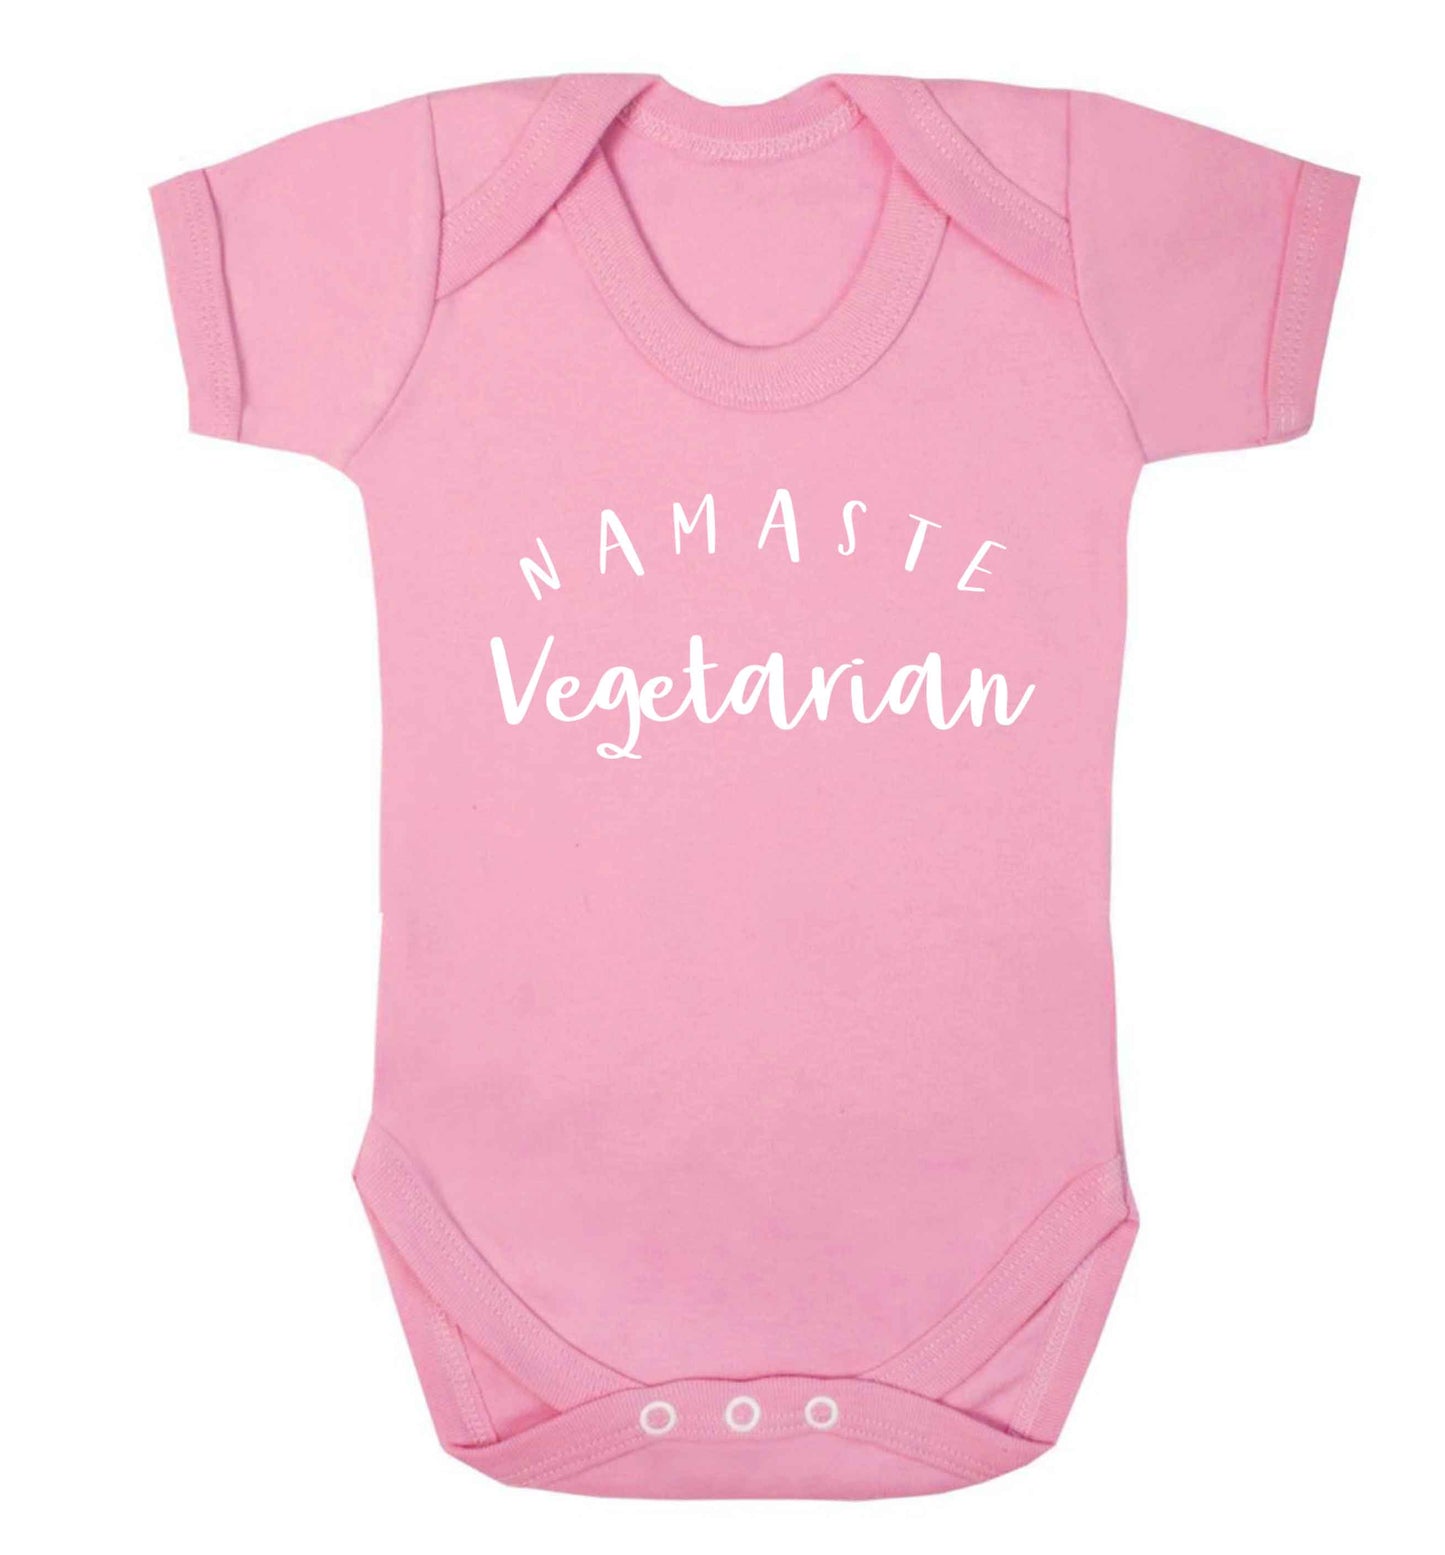 Namaste vegetarian Baby Vest pale pink 18-24 months